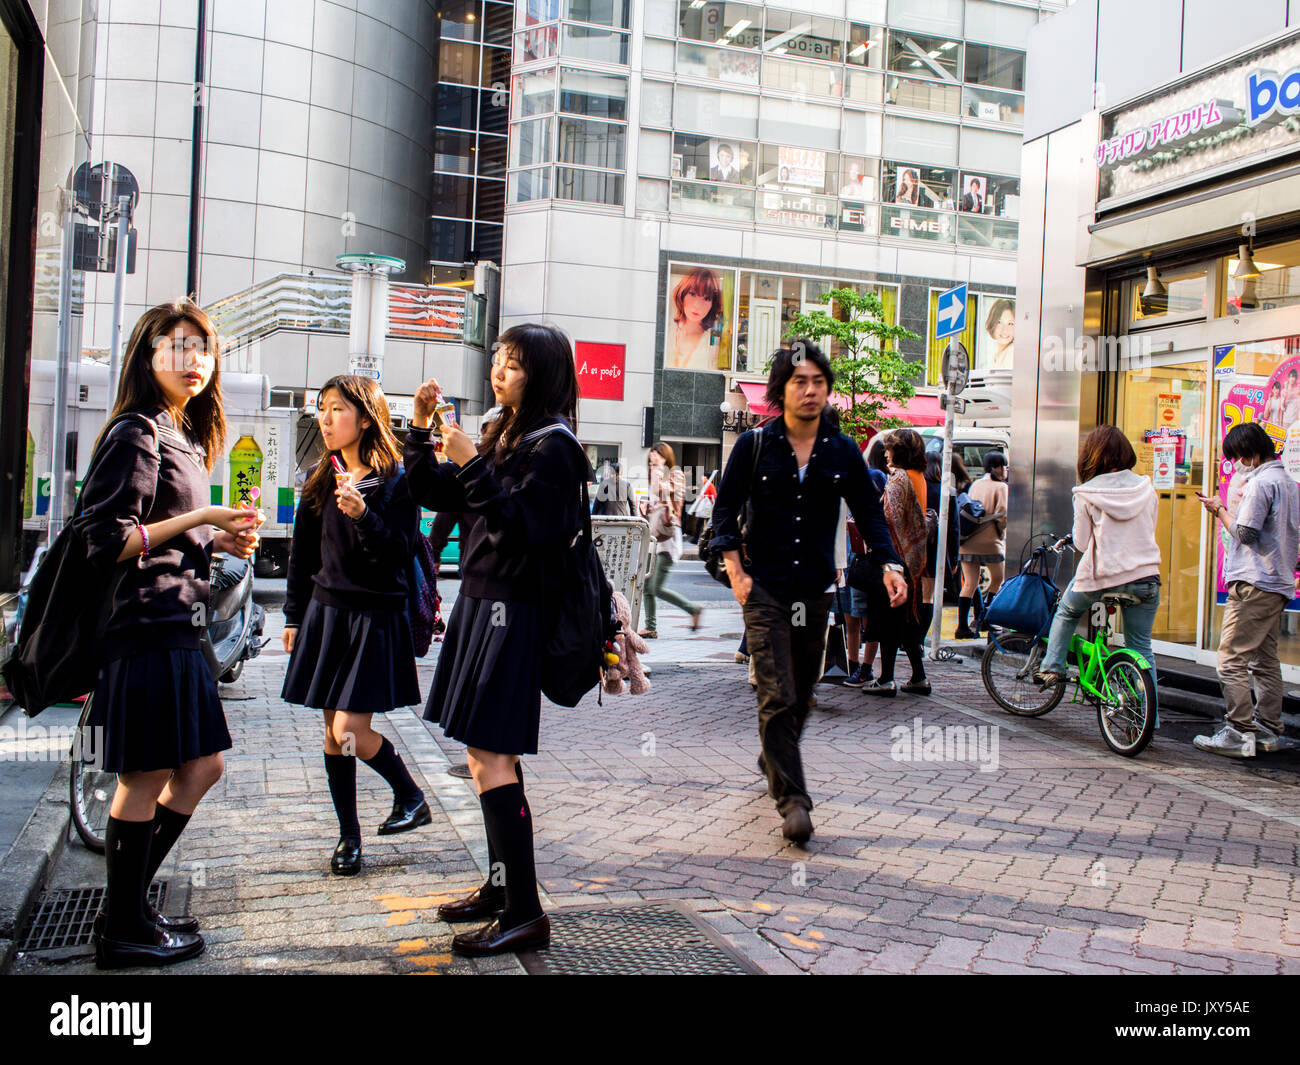 Three schoolgirls in uniform eating ice cream, a man walking past, city street, Shibuya, Tokyo, Japan Stock Photo